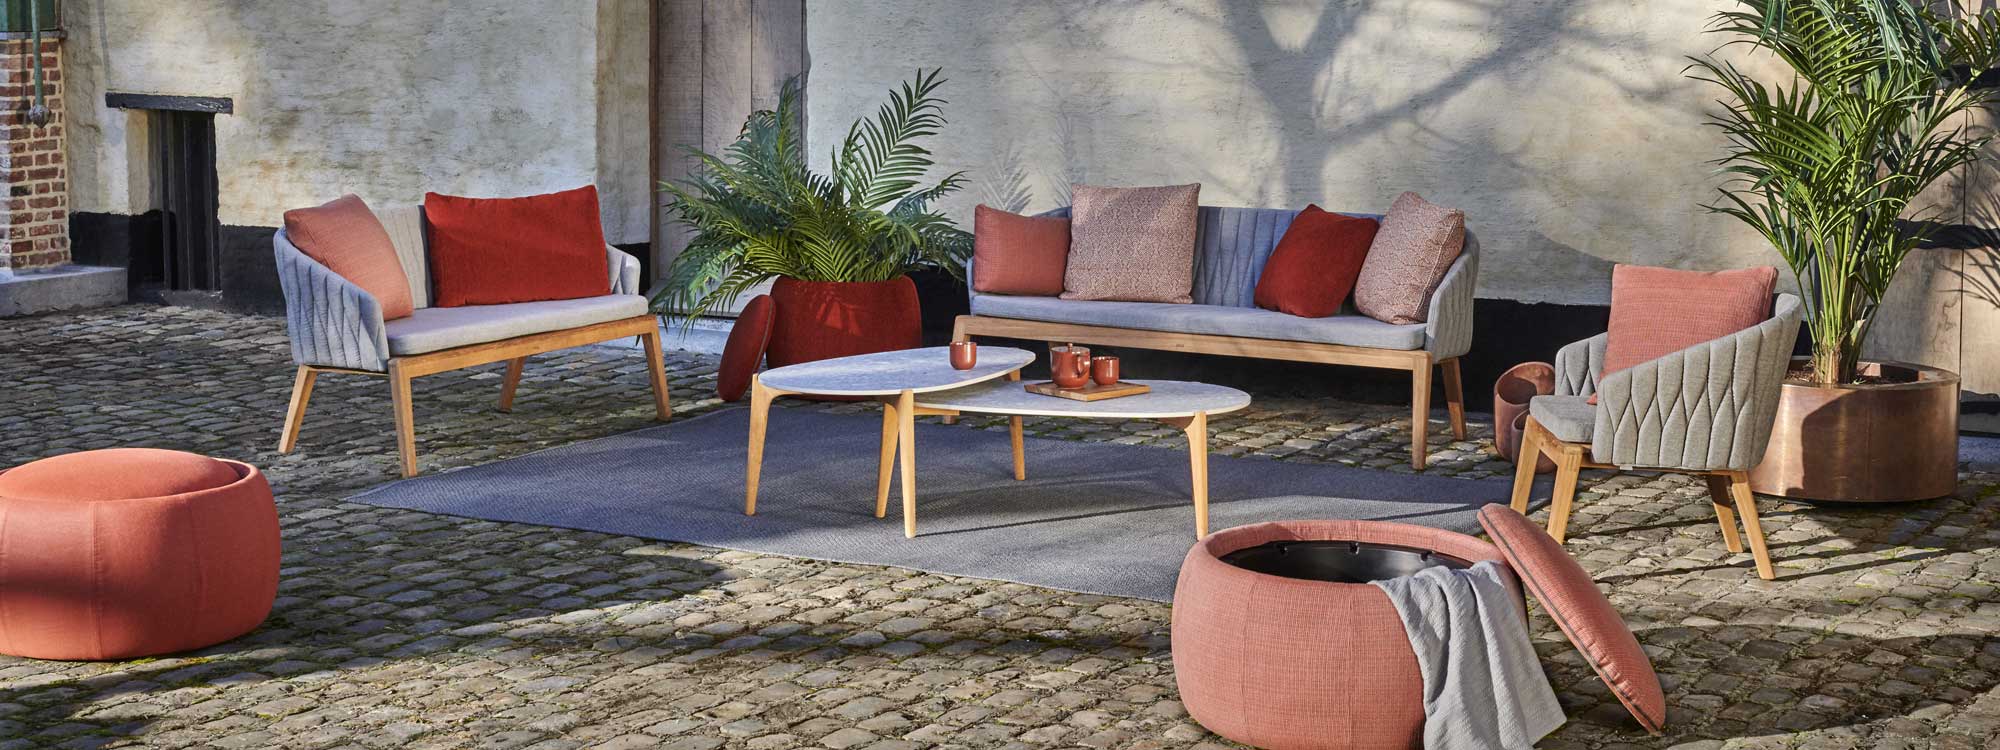 Image of Royal Botania Calypso garden sofa and Tea Time exterior low tables on terrace